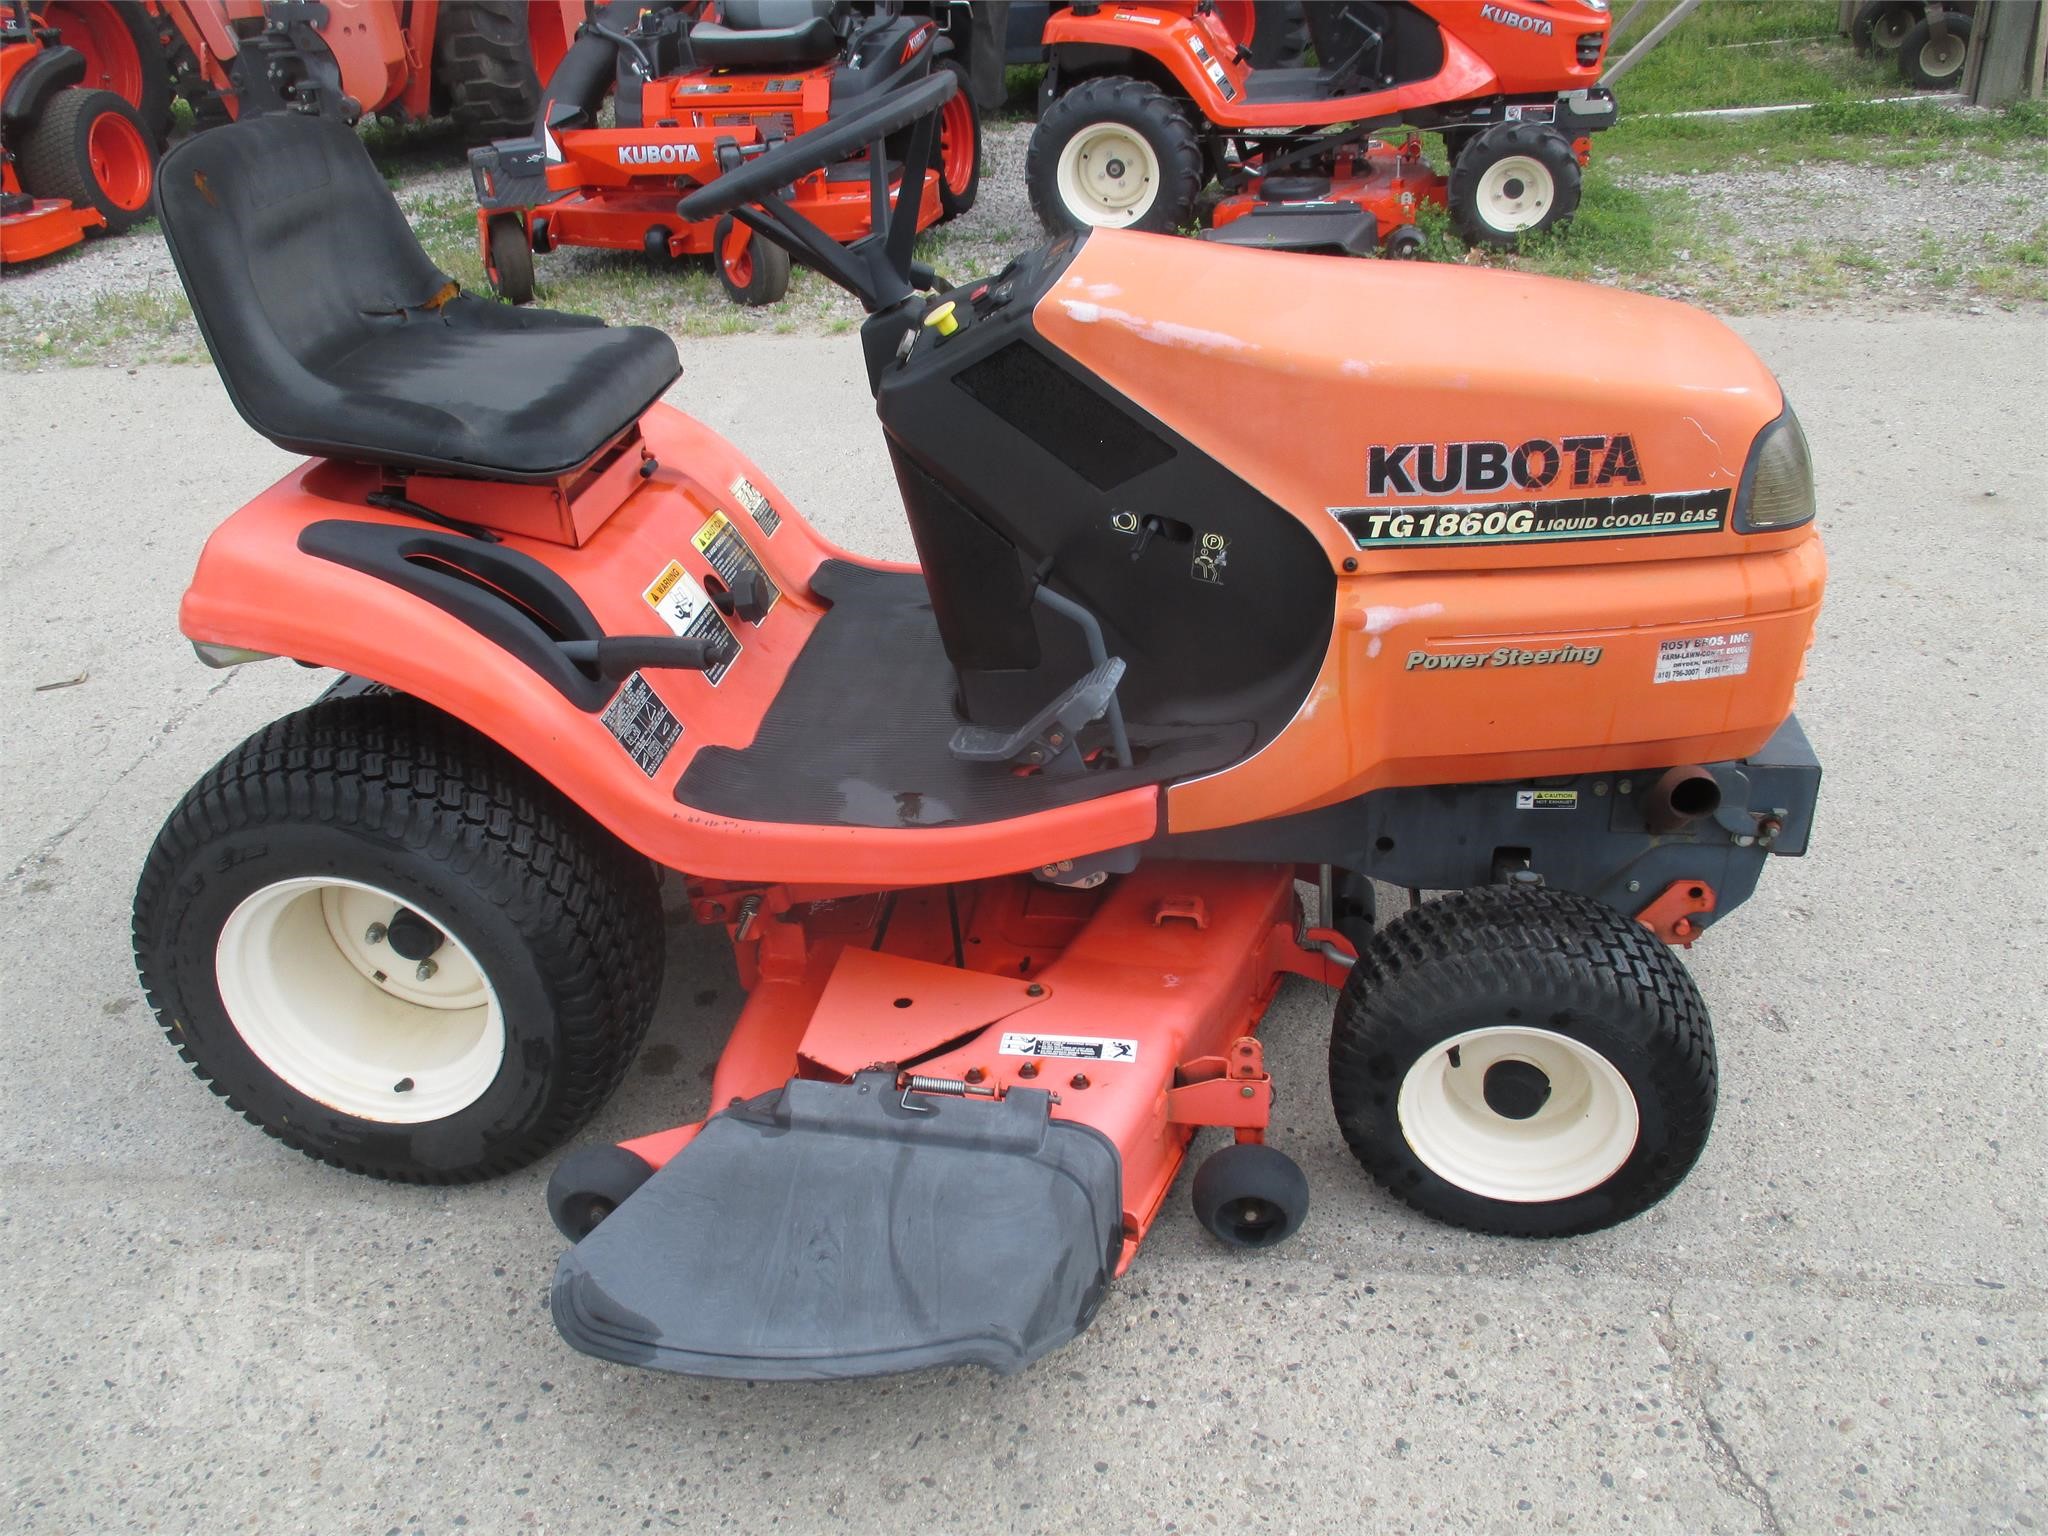 Kubota Tg1860g For Sale In Dryden Michigan